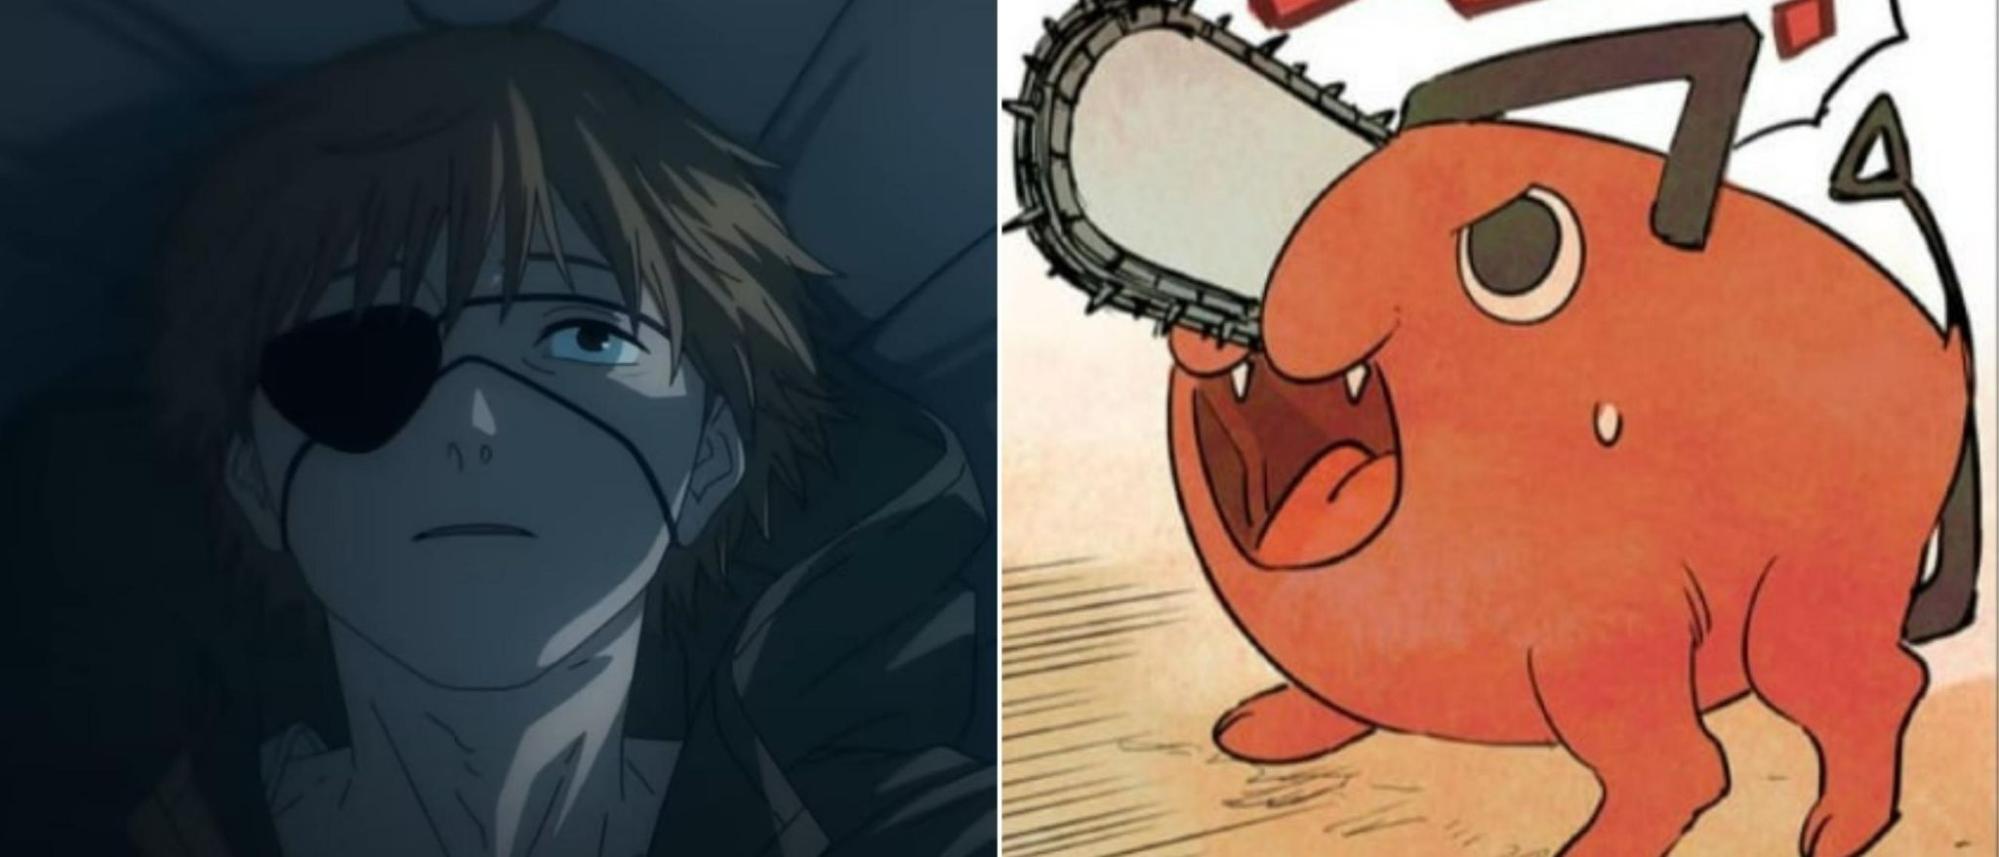 Fall 2022 anime - chainsaw man collage of pochita and denji